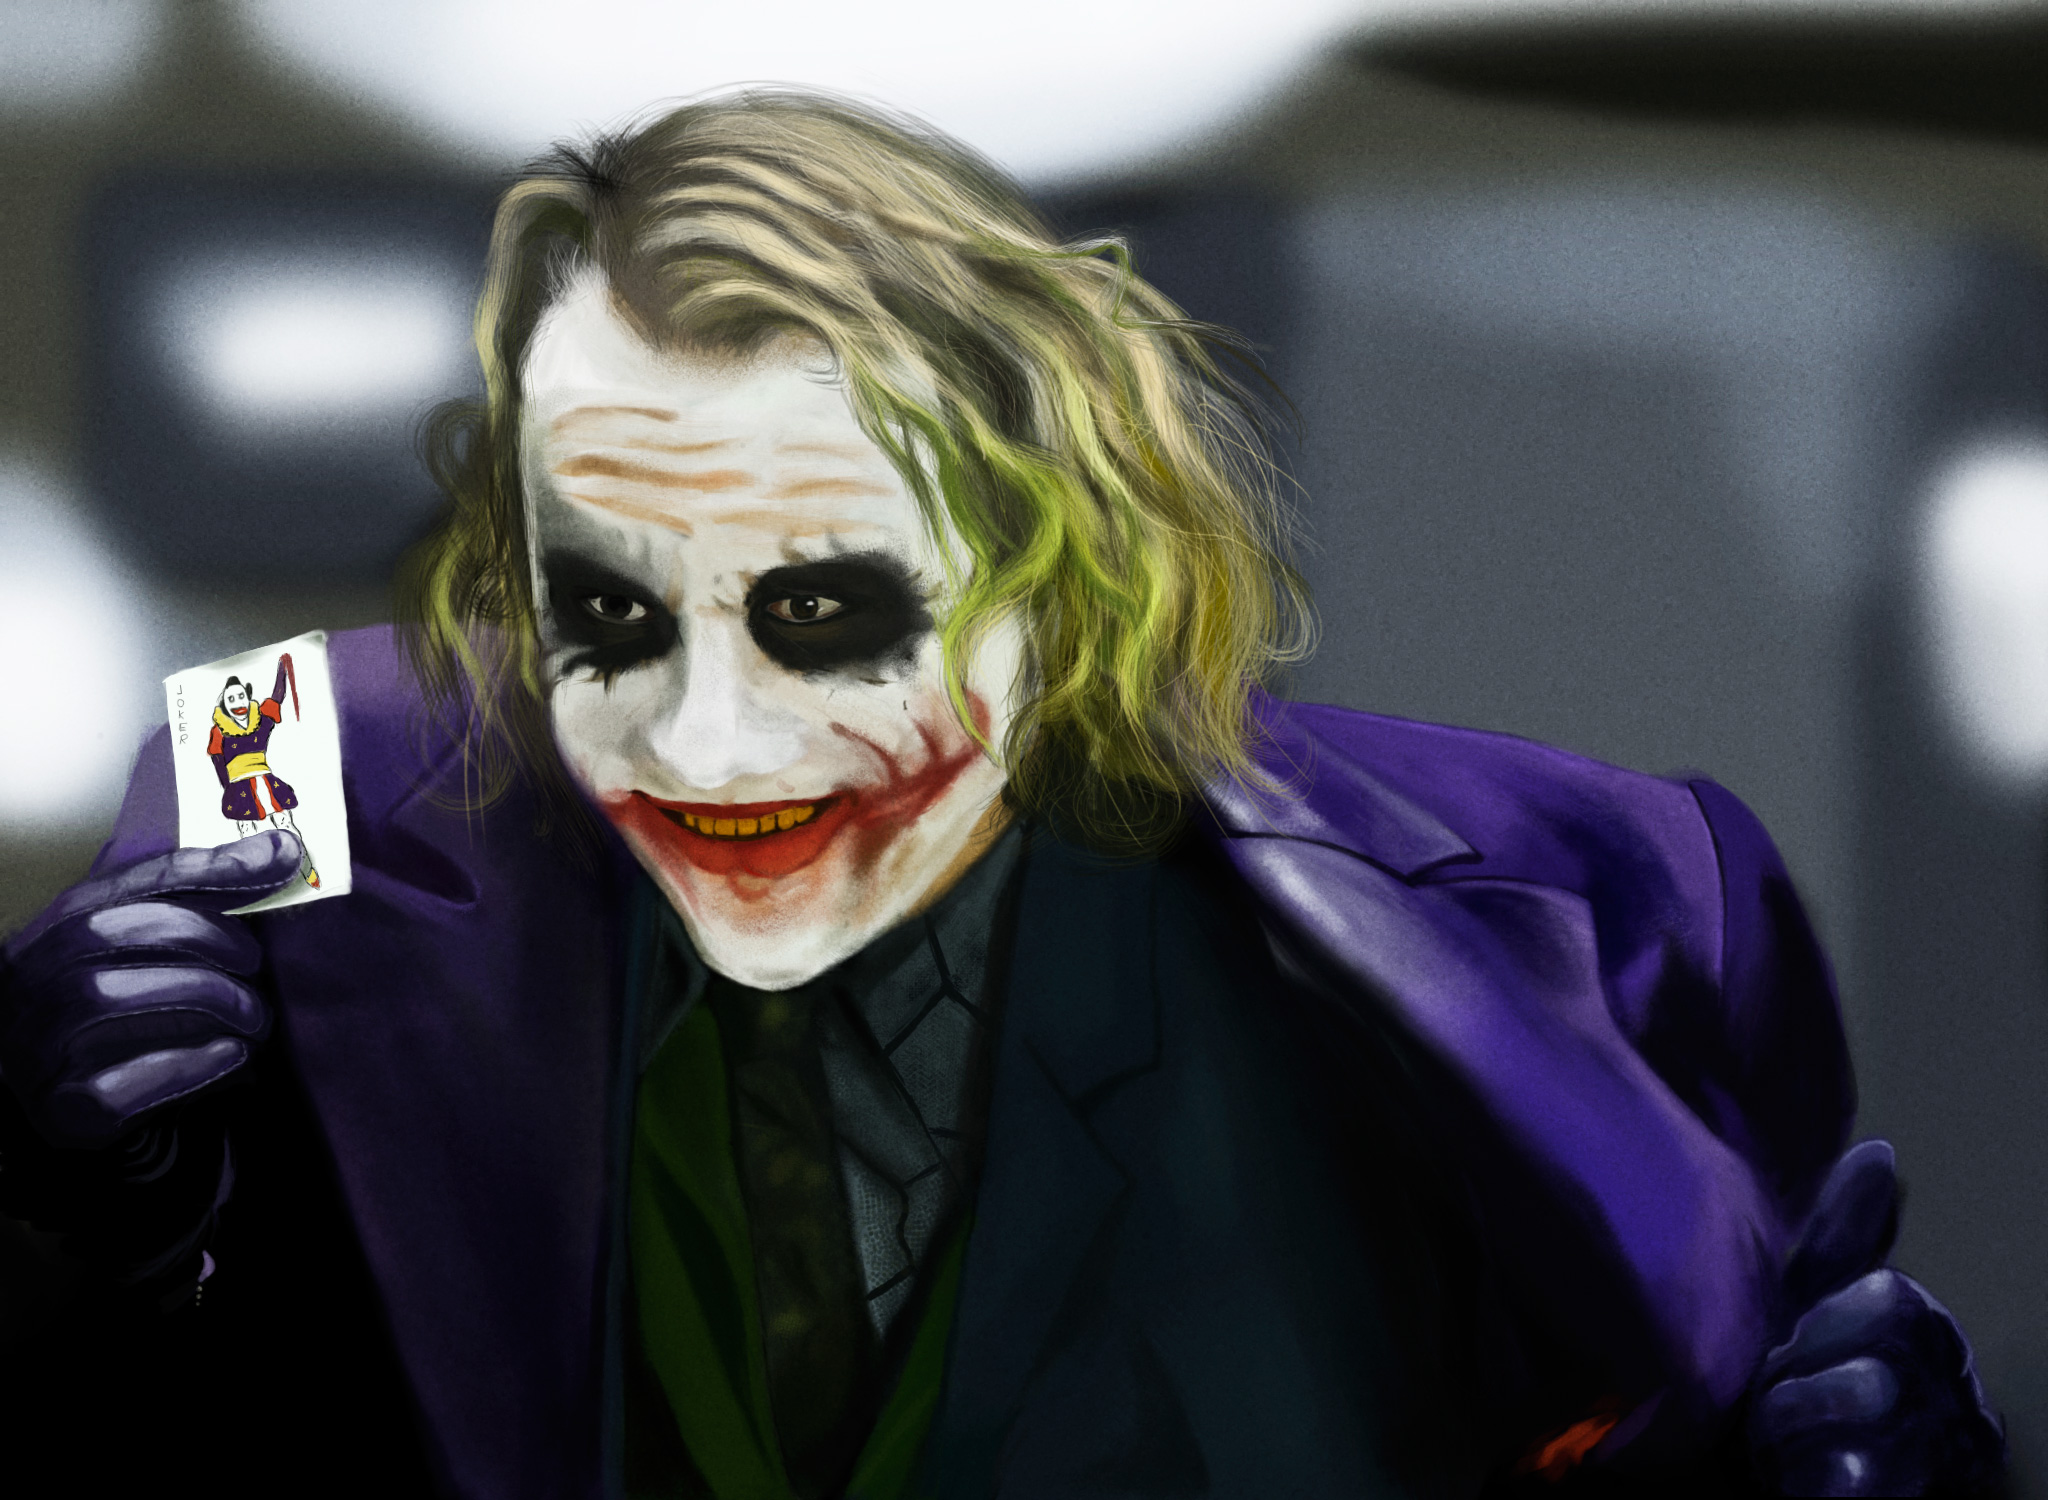 The Joker - Heath Ledger from the Dark Knight by kartjeeva on DeviantArt